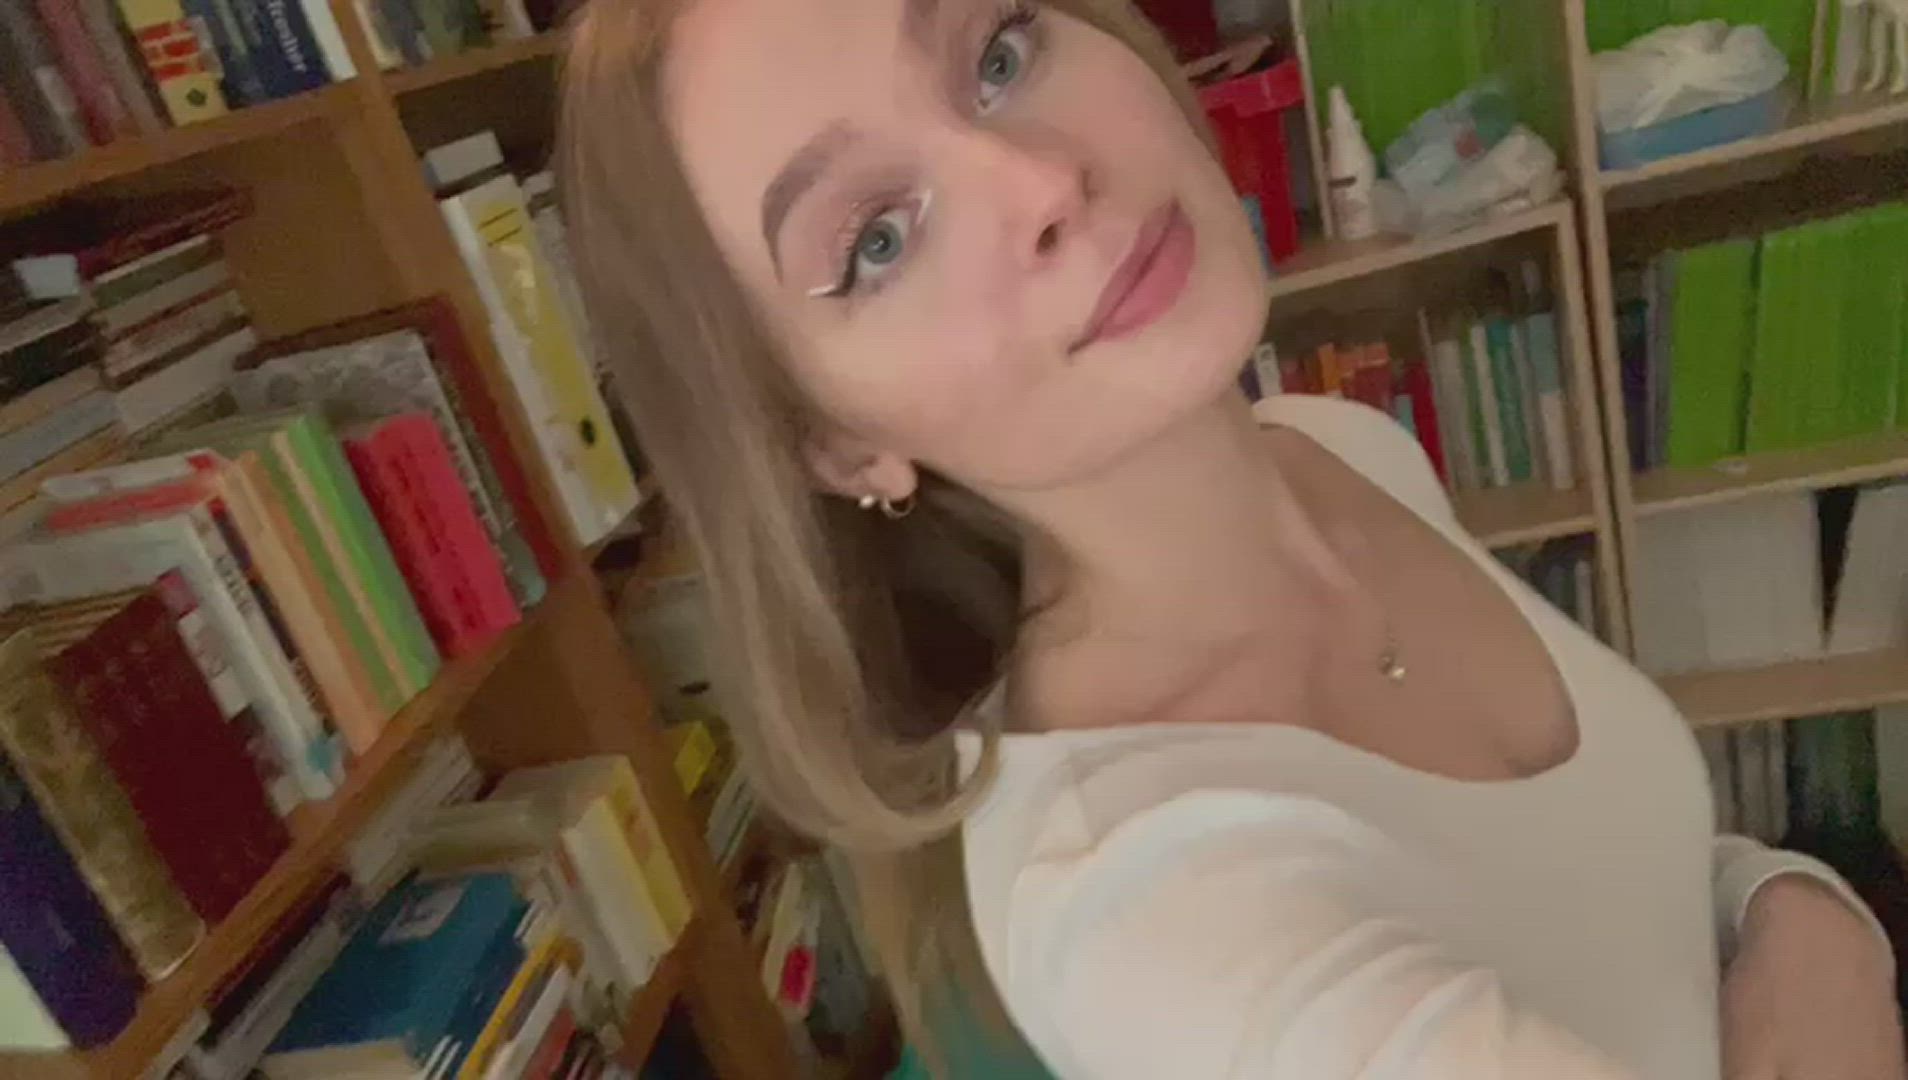 Schoolgirl porn video with onlyfans model Sophiemor <strong>@sophieemorgan</strong>